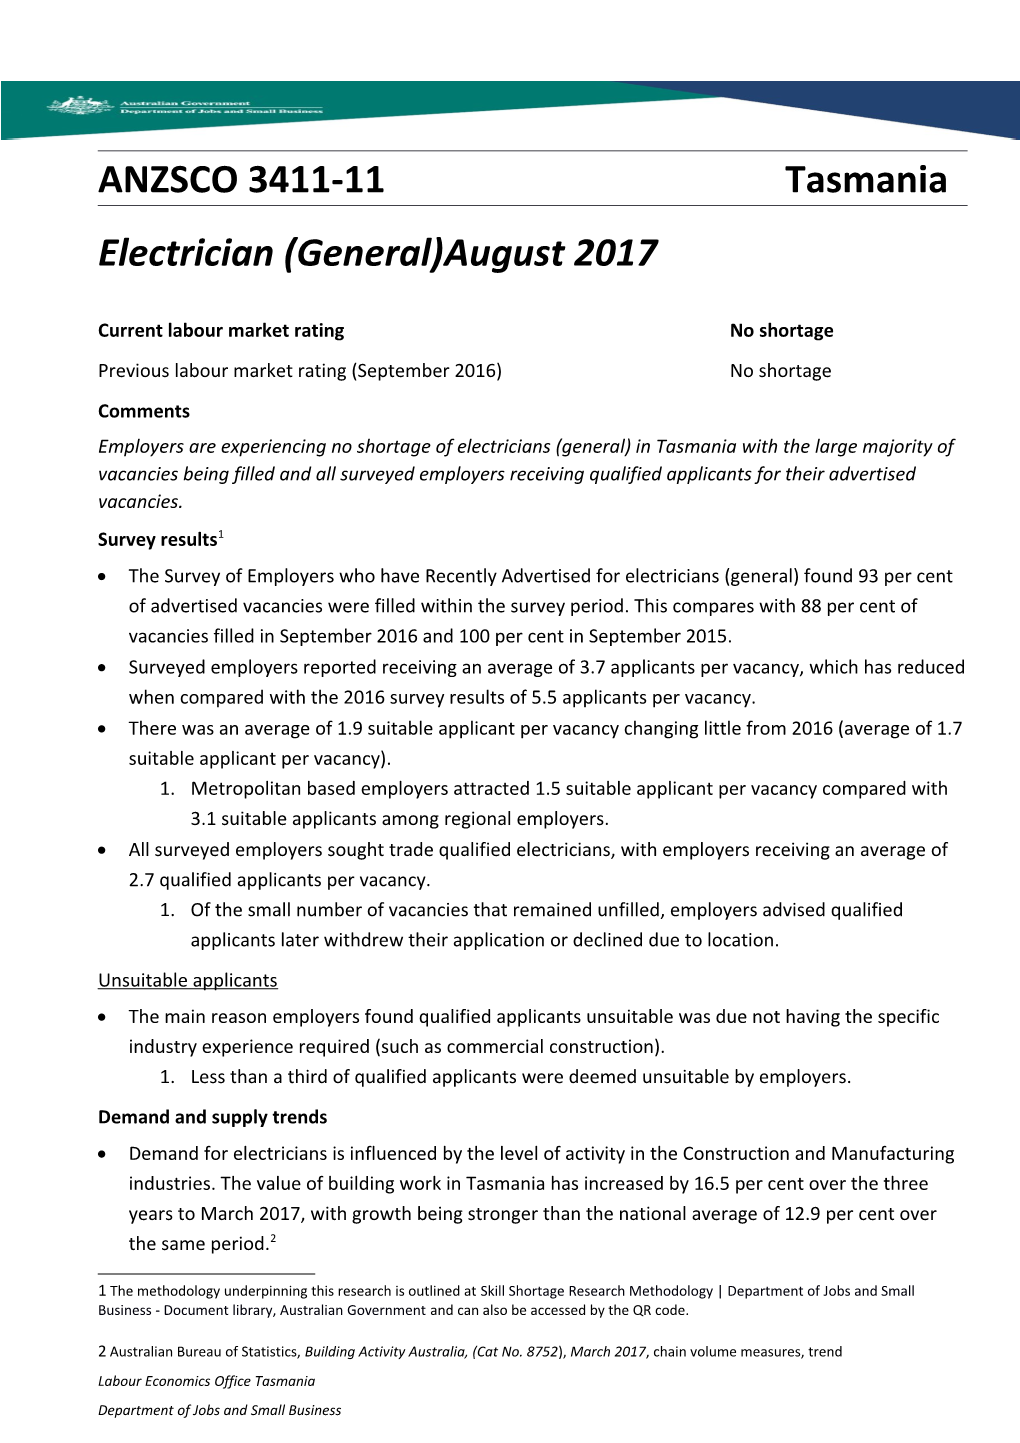 Electrician (General) Tasmania August 2017